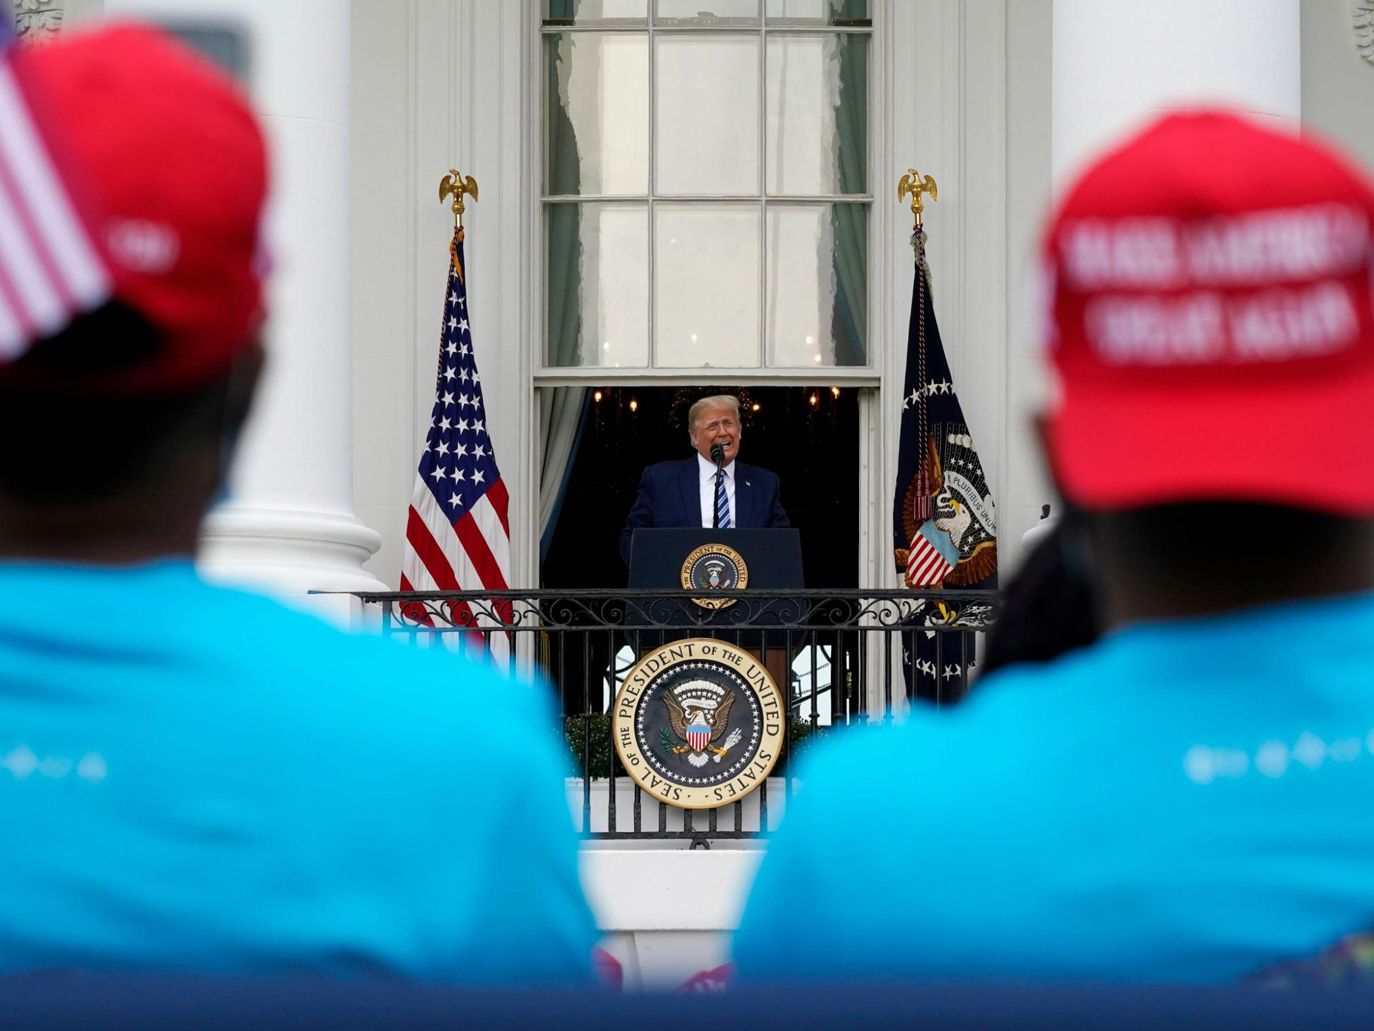 Photos: Trump welcomes hundreds to White House event